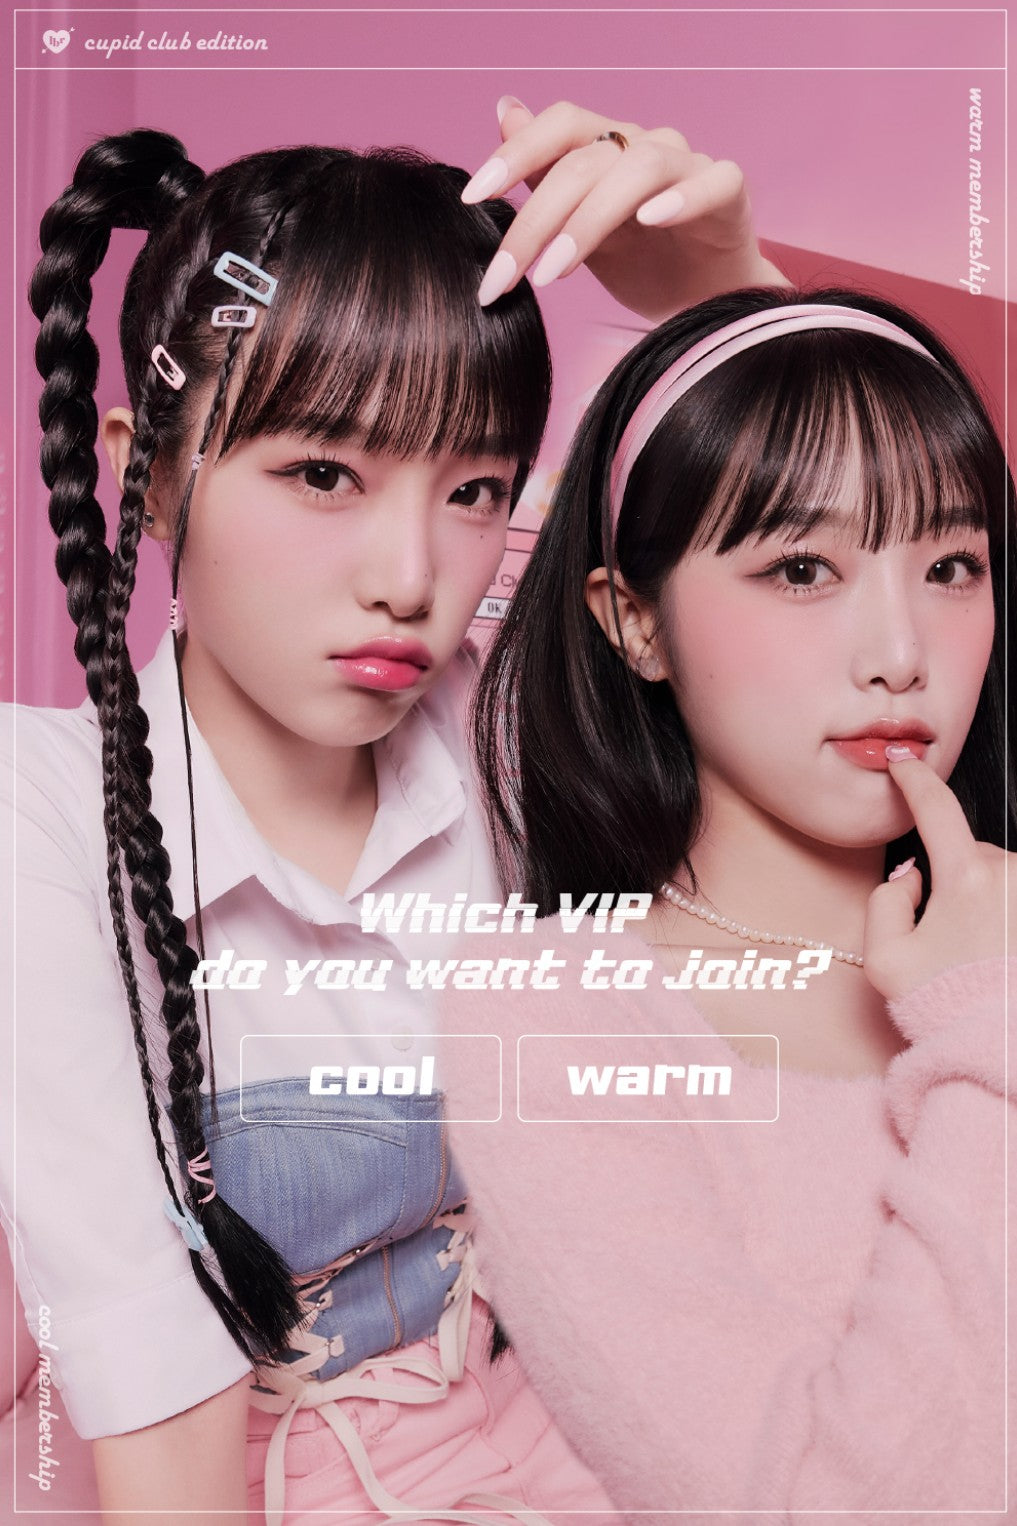 [Lilybyred] Cupid Club - VIP Membership Kit (Eyeshadow Palette + Blusher + Lip Tint Set)